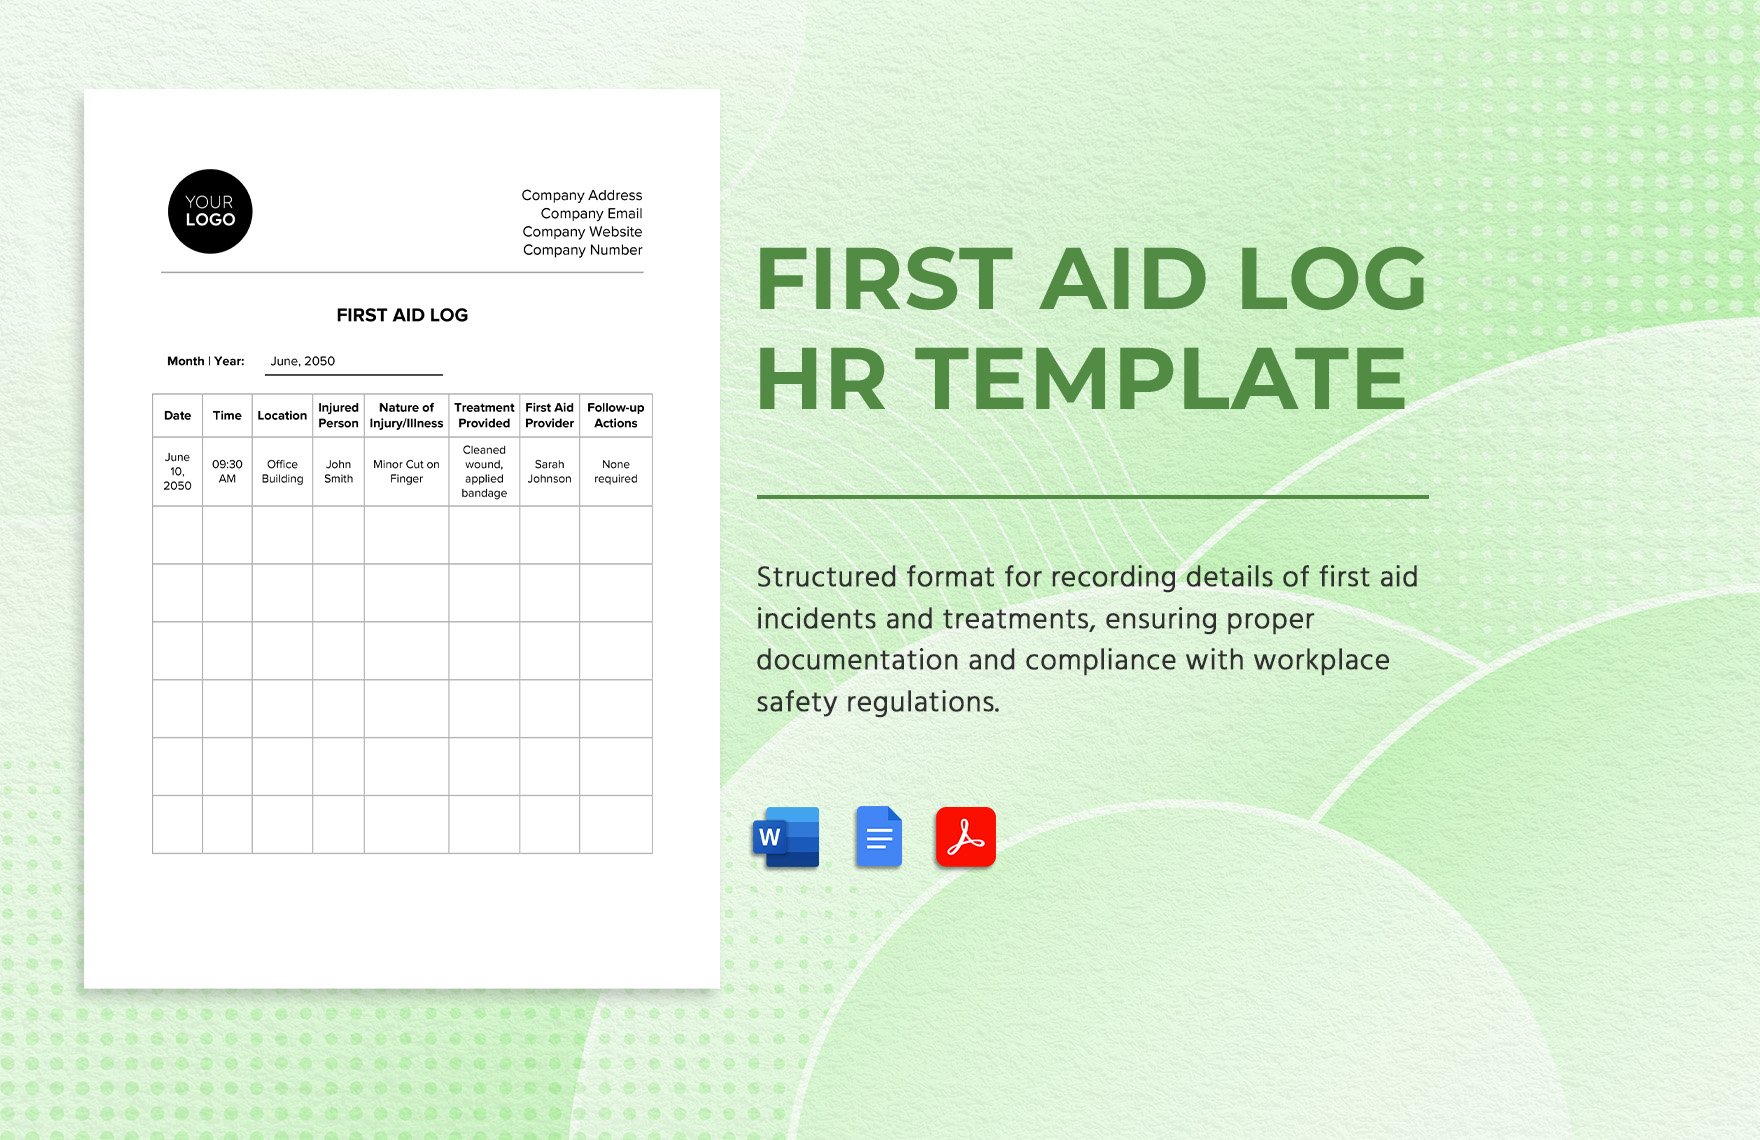 First Aid Log HR Template